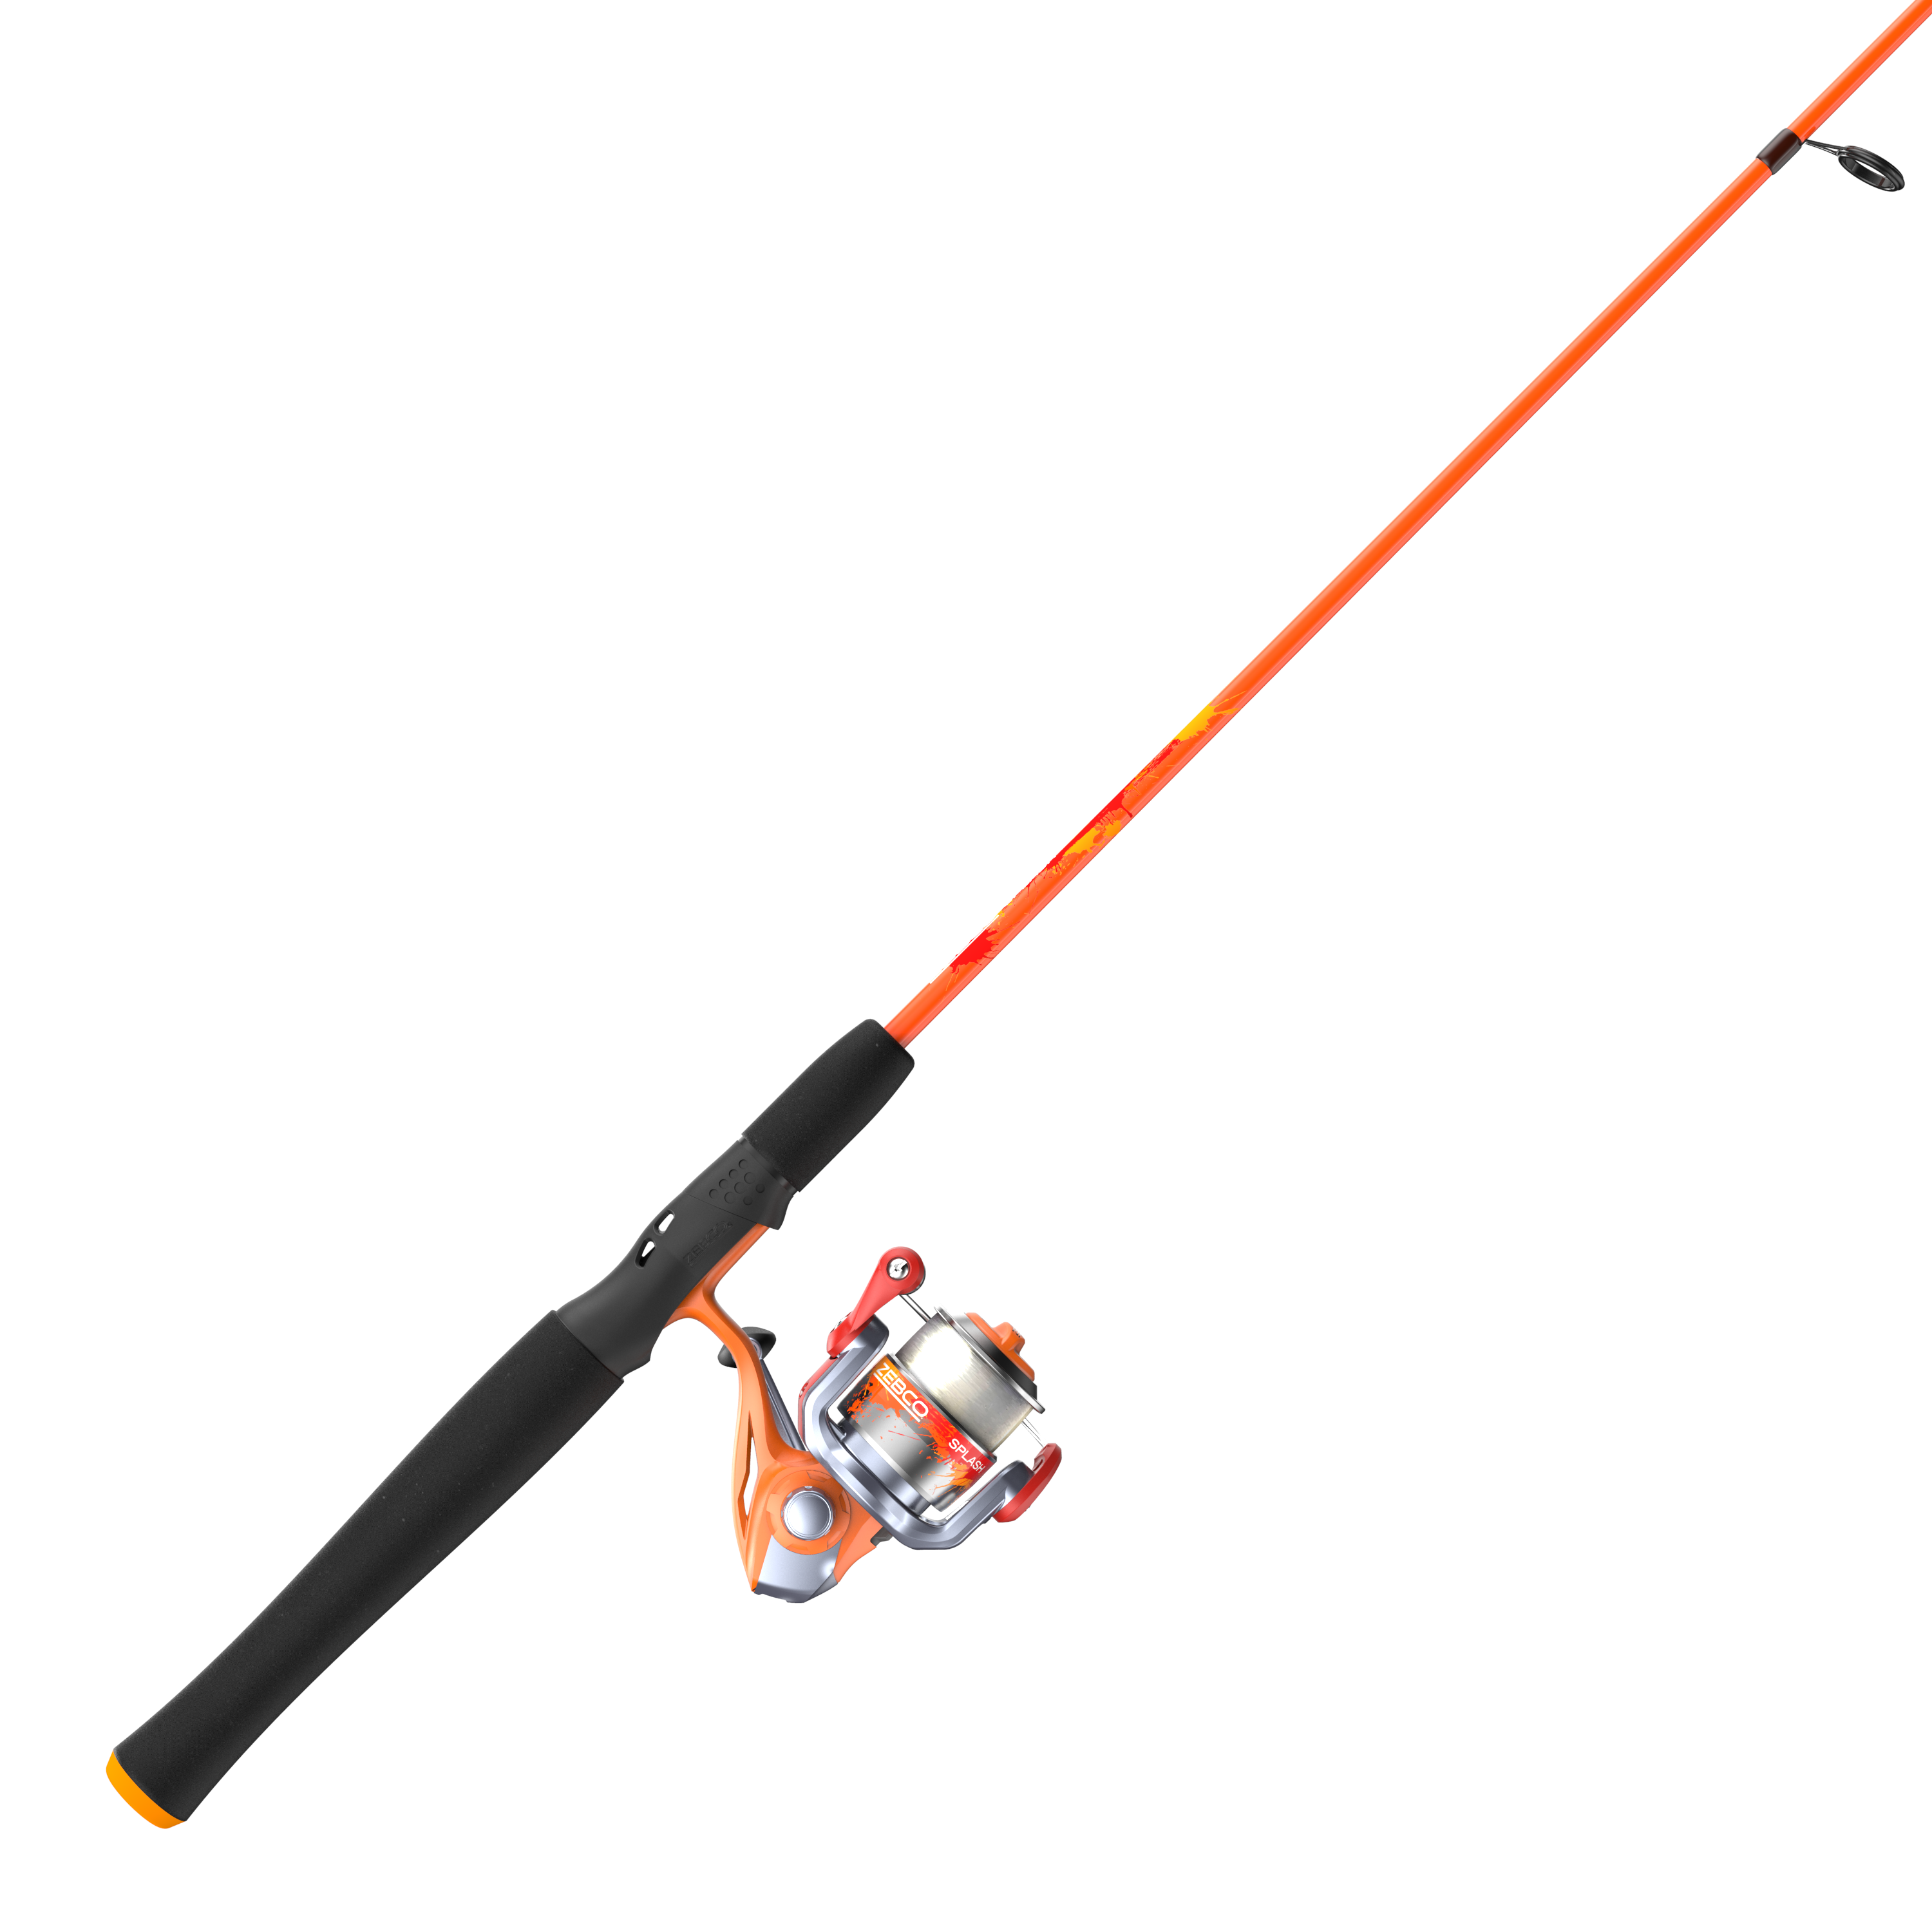 Youth Fishing Rod & Reel Combo- 5'6” Fiberglass Palestine